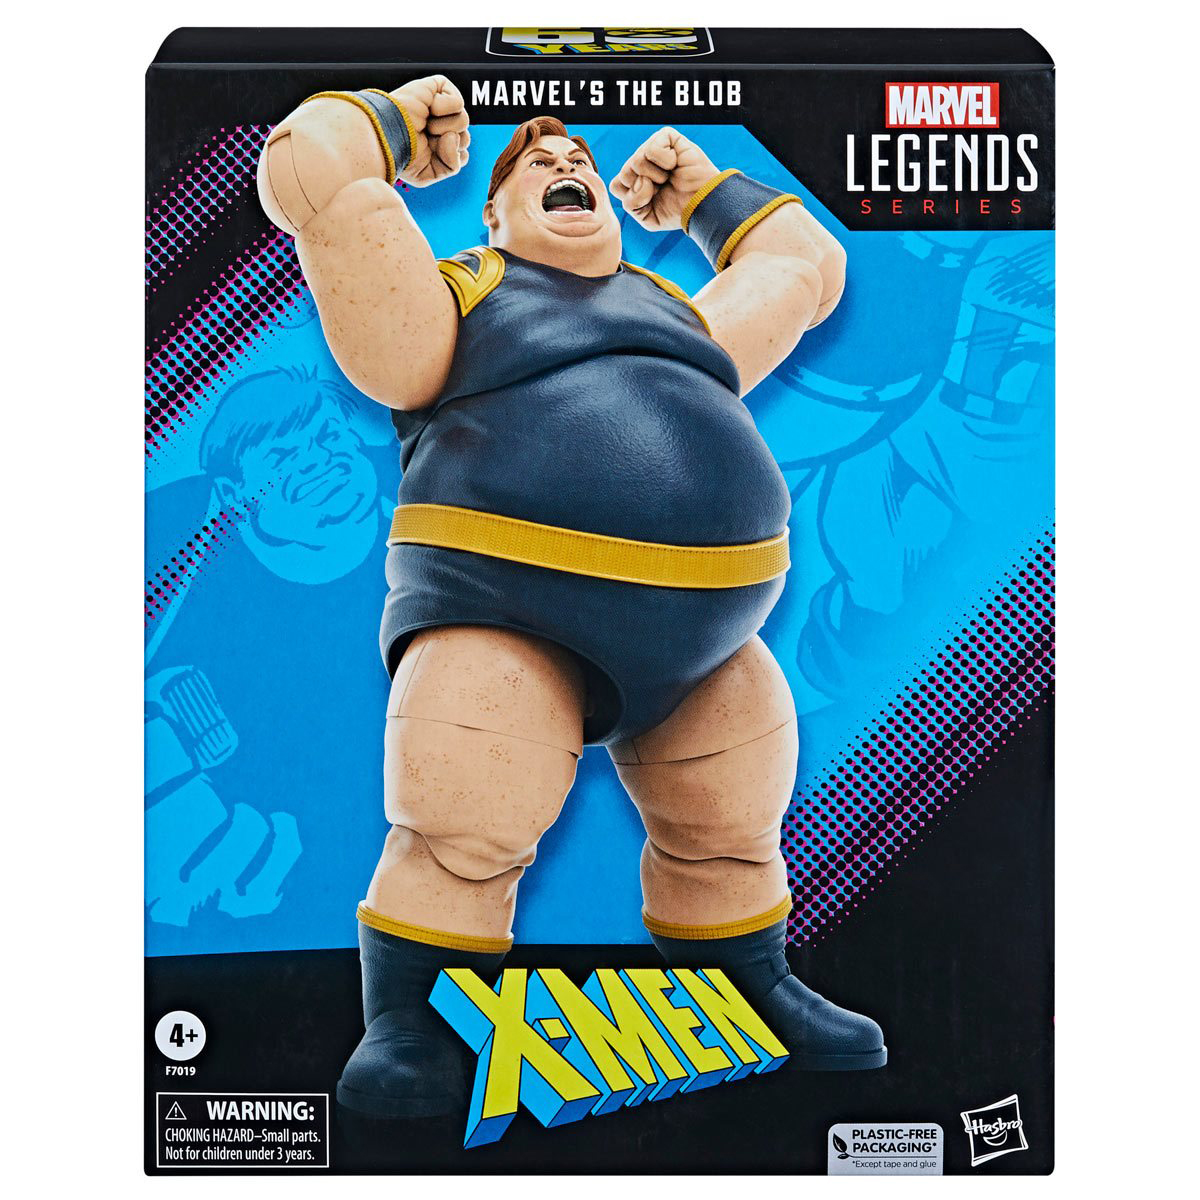 X-Men-60th-Anniversary-Marvel-Legends-The-Blob-Action-Figure-Packaging-Box-Art-1